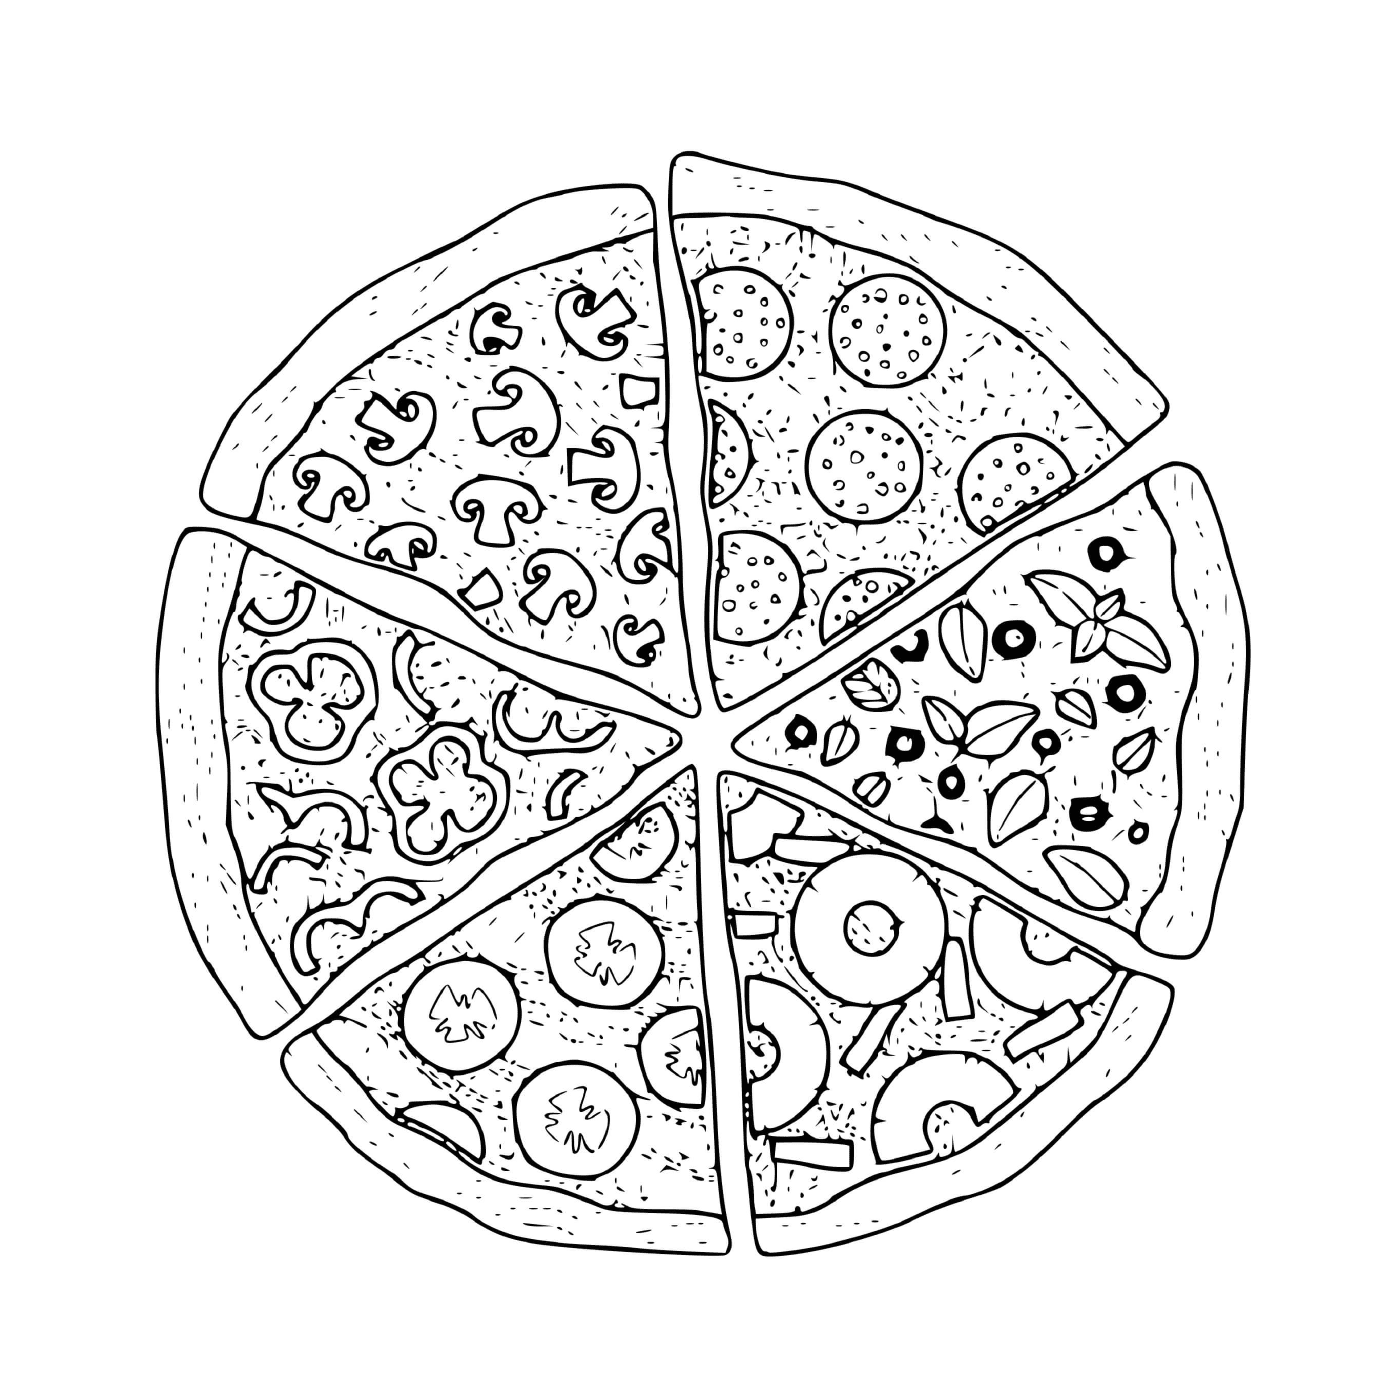  Several pizza trims 